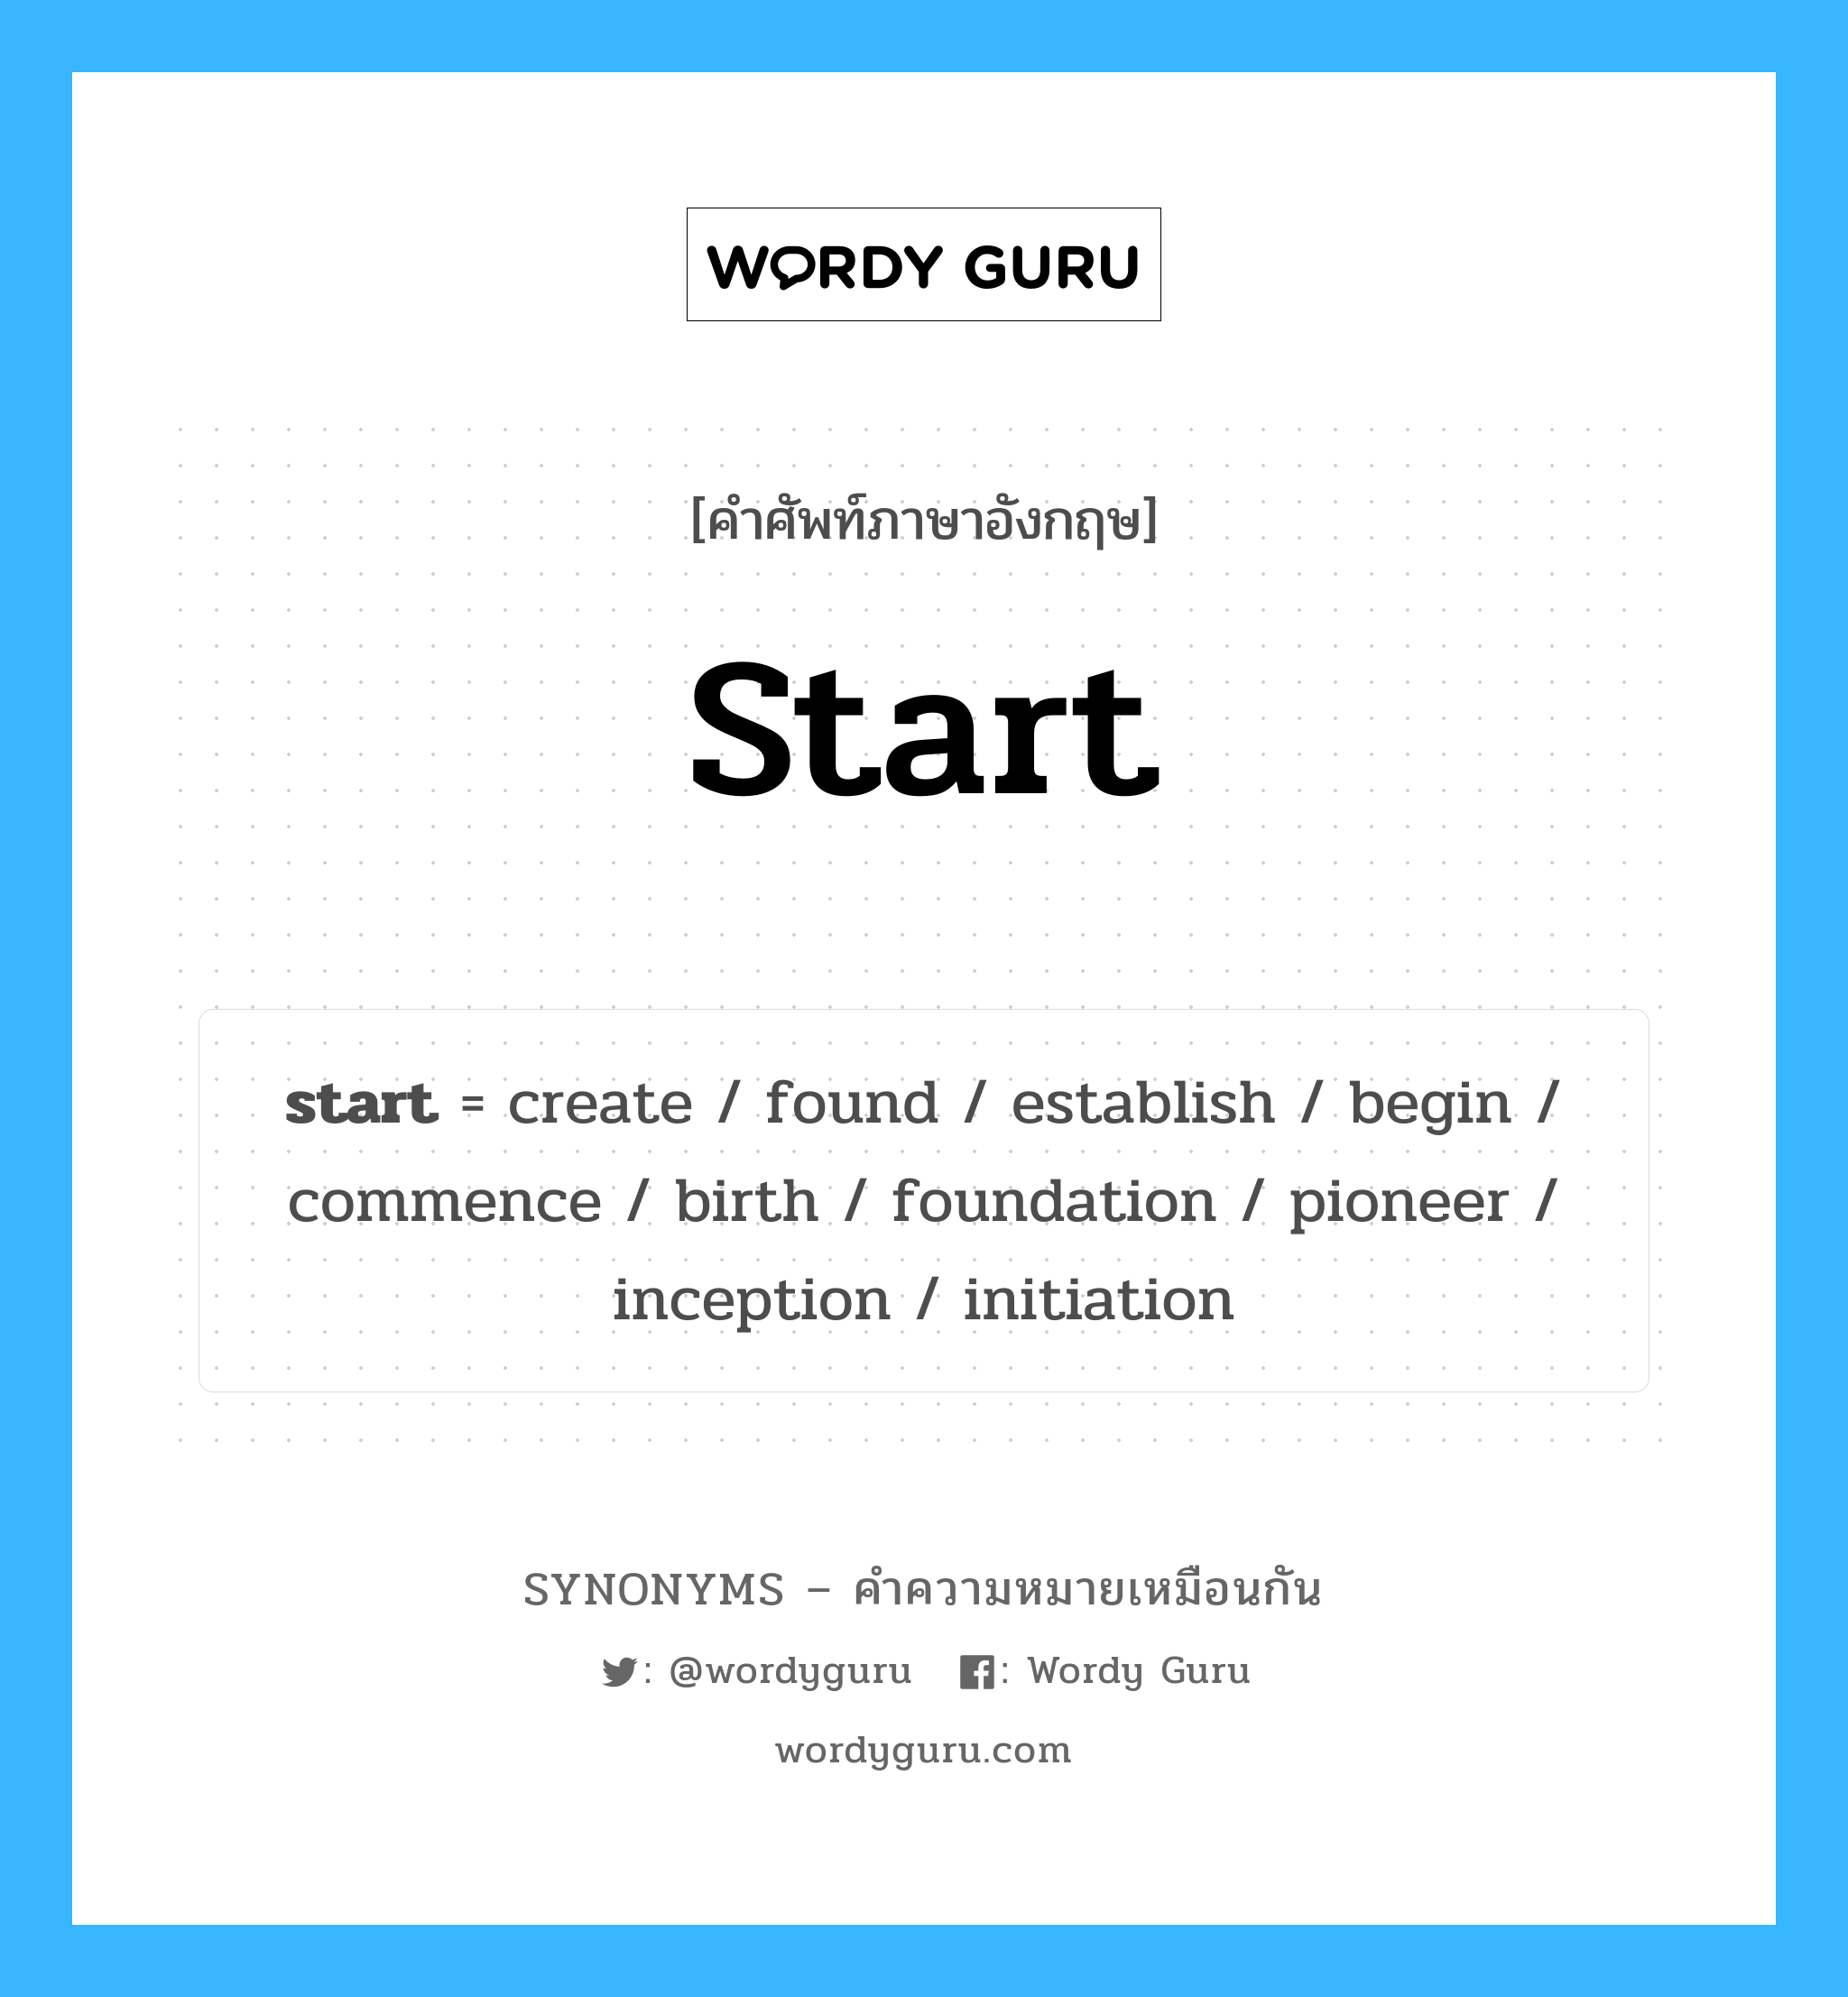 found เป็นหนึ่งใน start และมีคำอื่น ๆ อีกดังนี้, คำศัพท์ภาษาอังกฤษ found ความหมายคล้ายกันกับ start แปลว่า พบ หมวด start